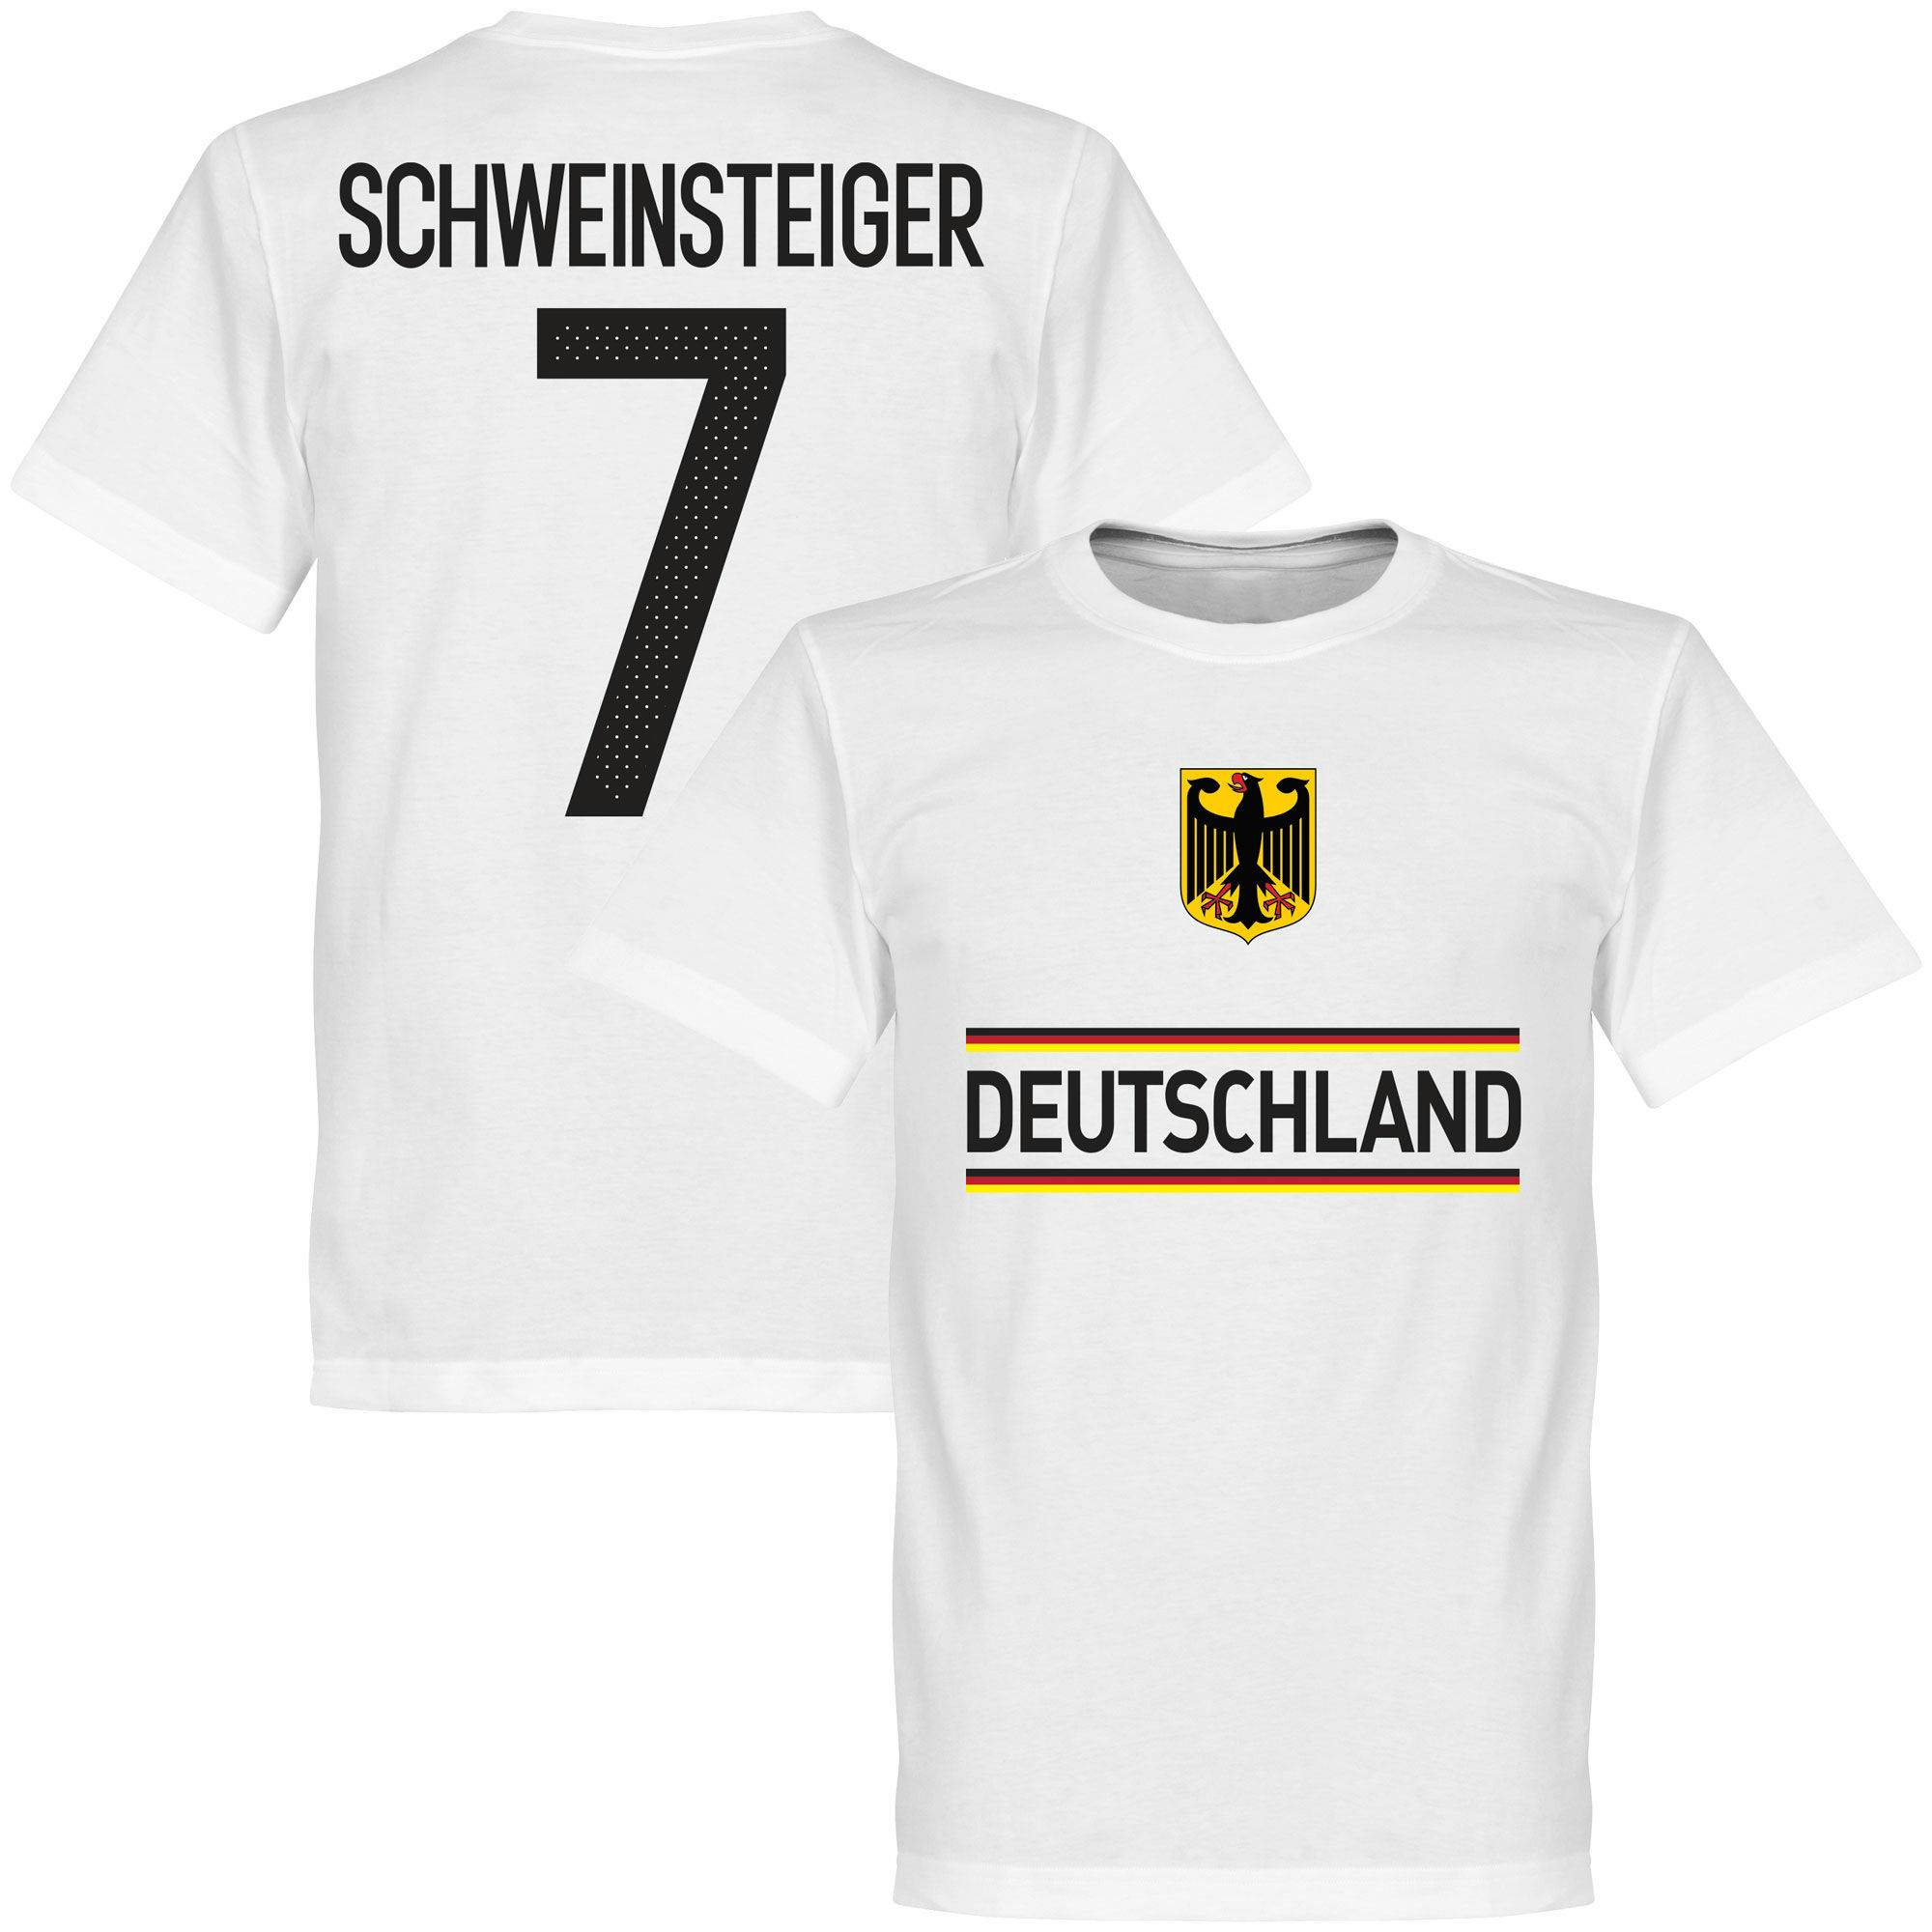 Německo - Tričko - Bastian Schweinsteiger, bílé, číslo 7